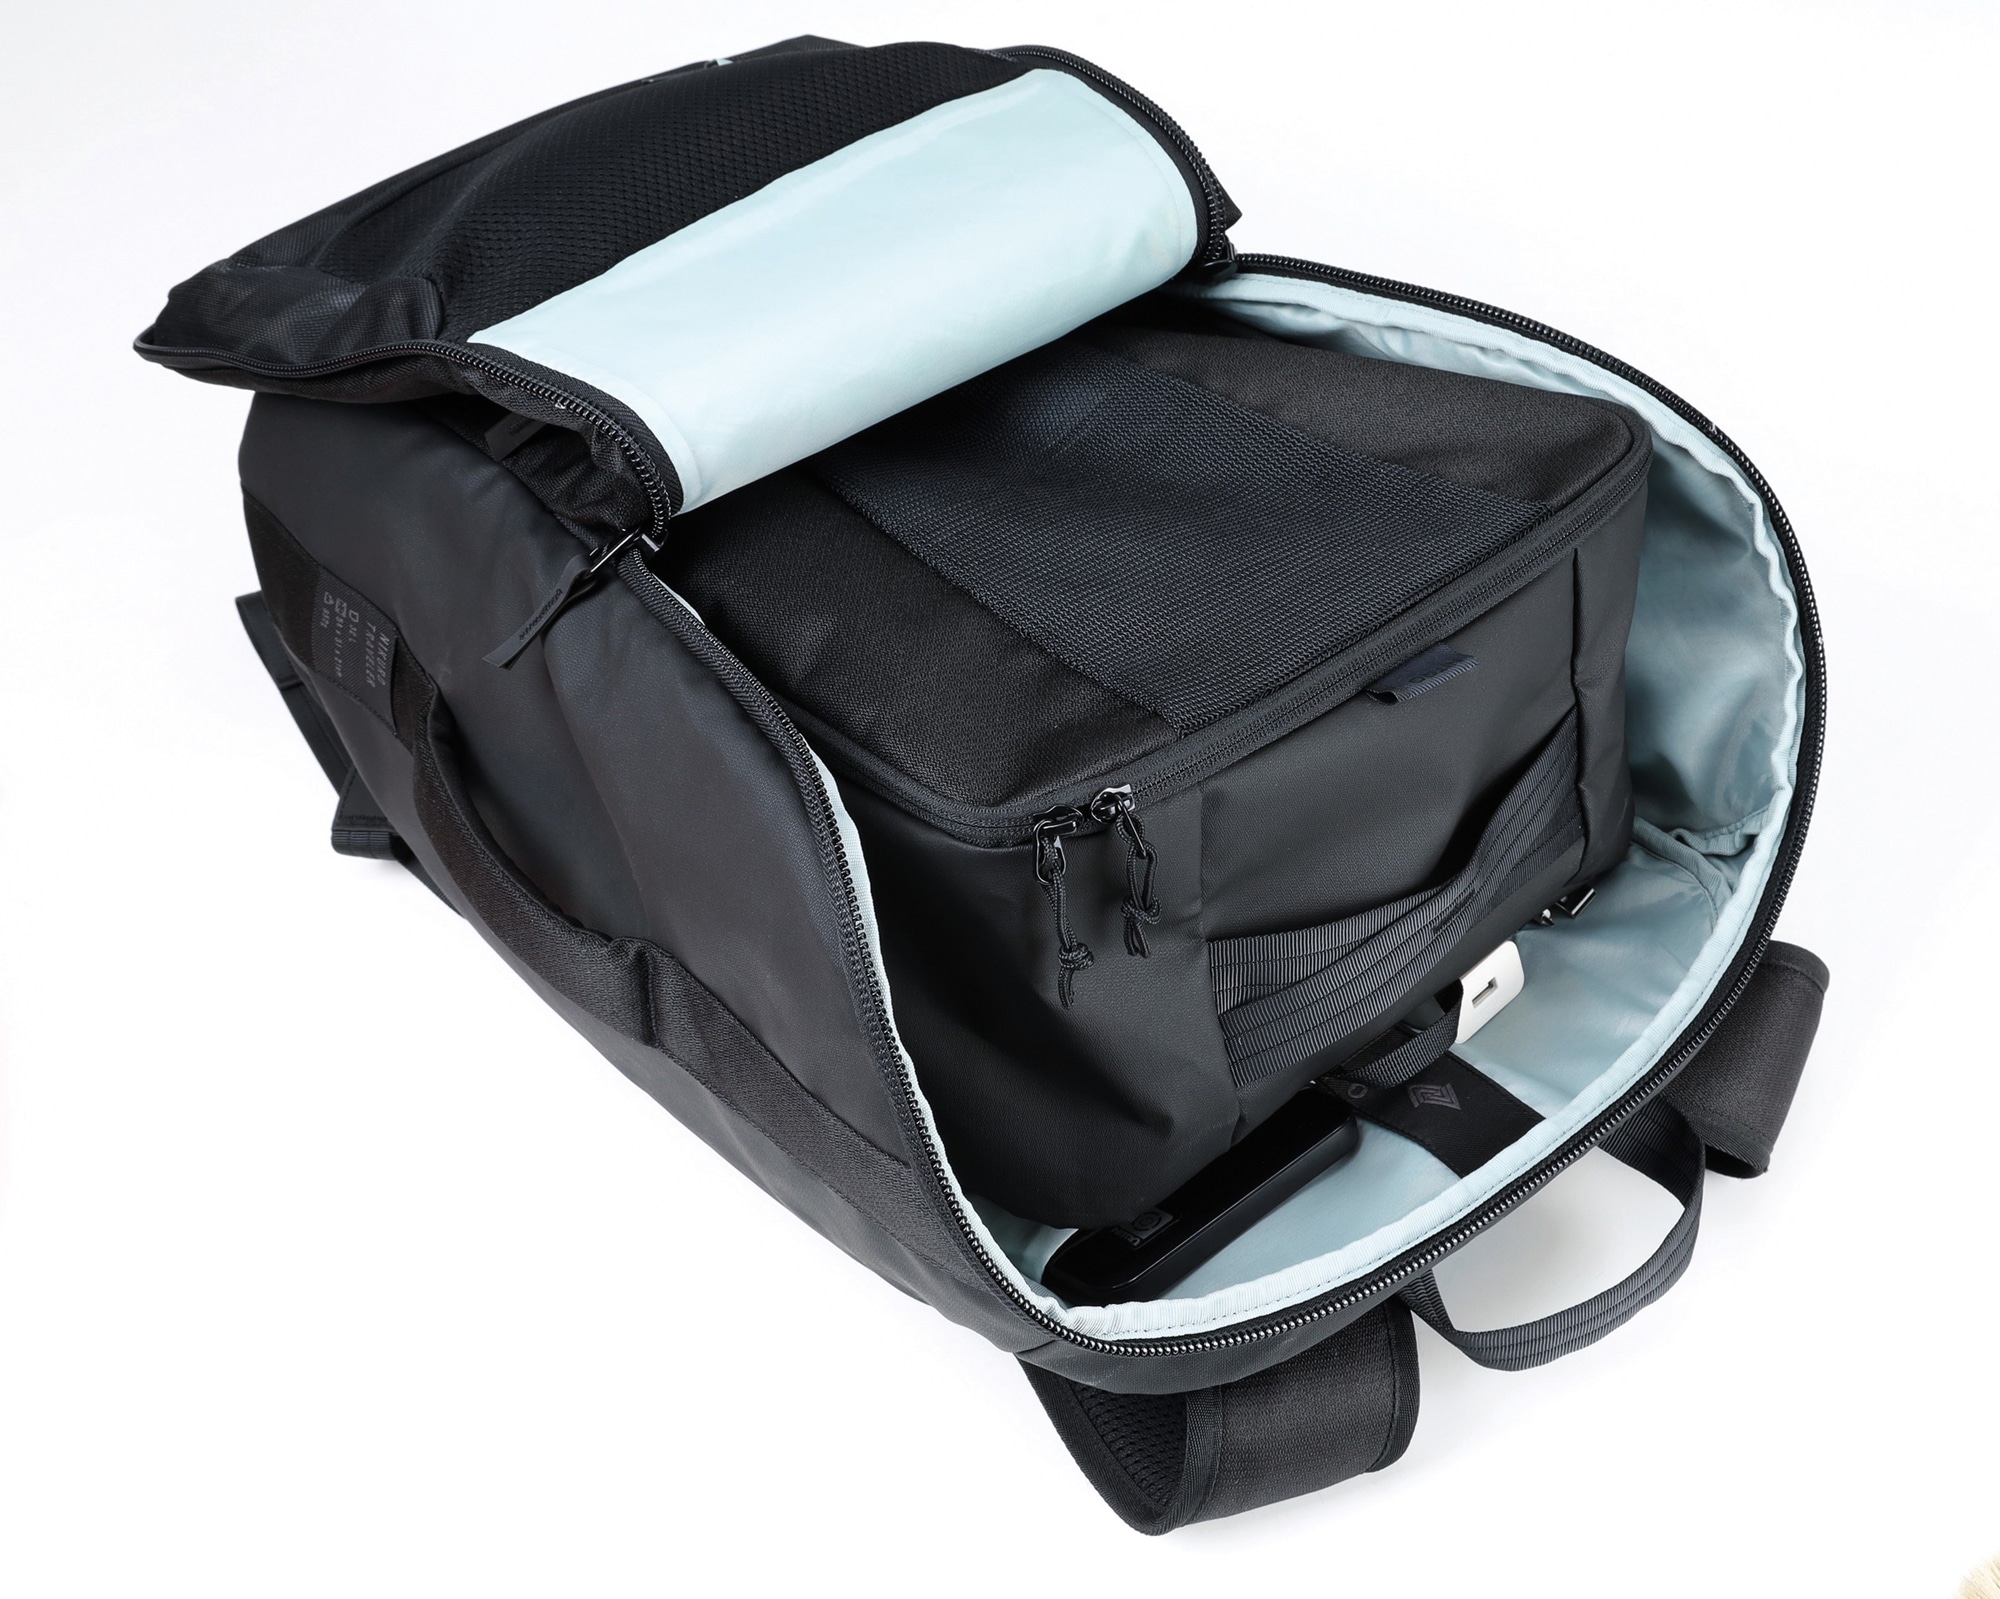 NITRO Freizeitrucksack »Nikuro Traveler«, Reisetasche, Travel Bag, Alltagsrucksack, Daypack